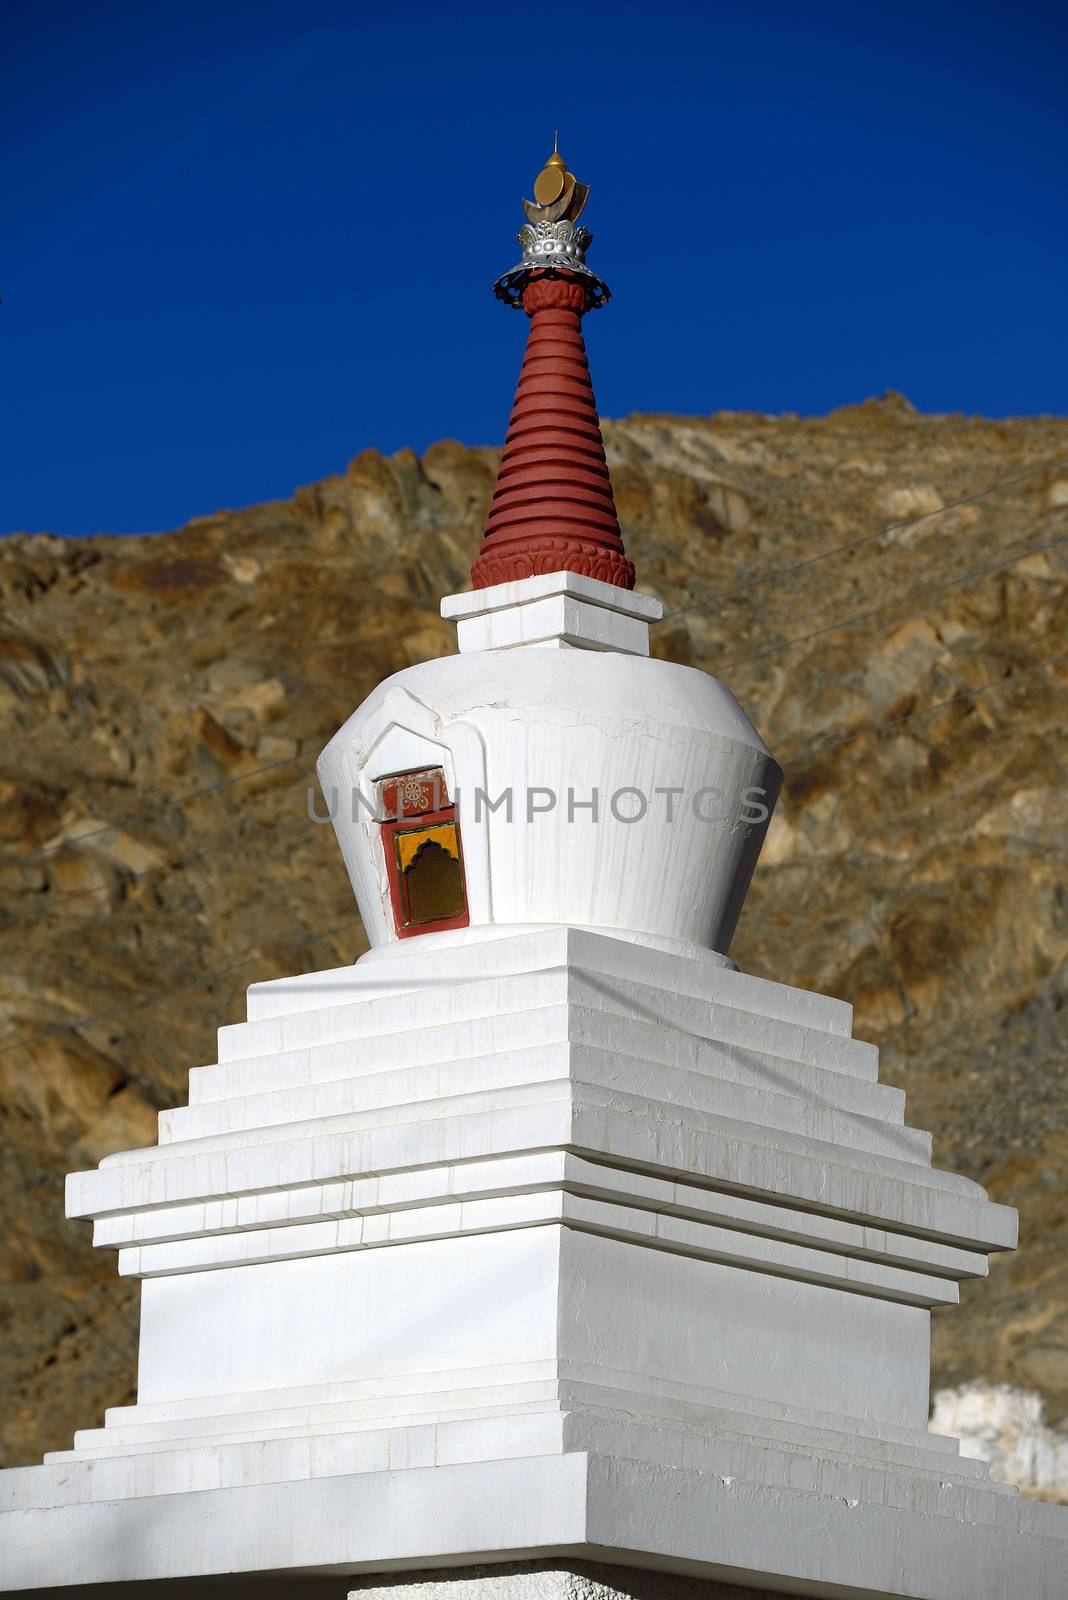 Gompa near a Buddhist monastery. Ladakh province. India by think4photop